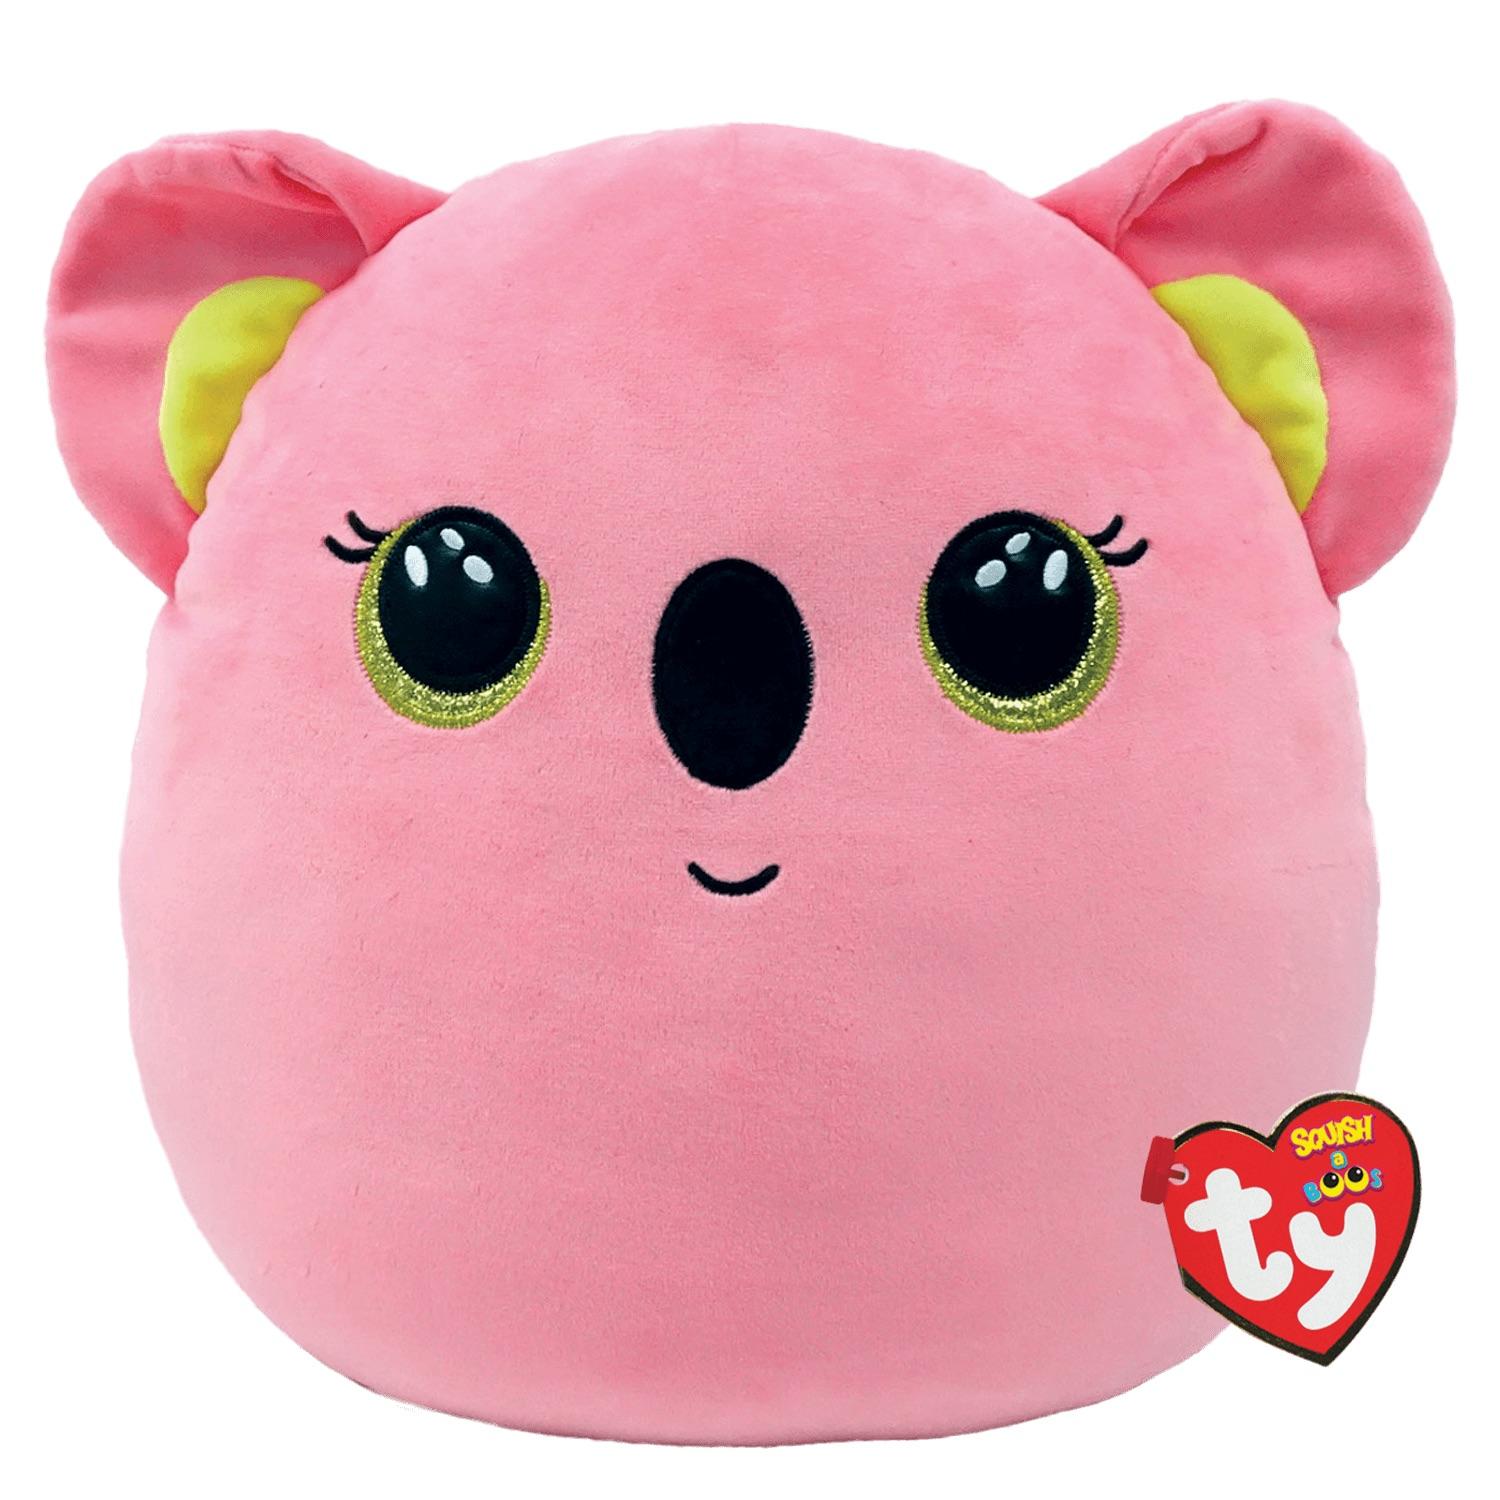 Oval, pink plush toy resembling a koala.